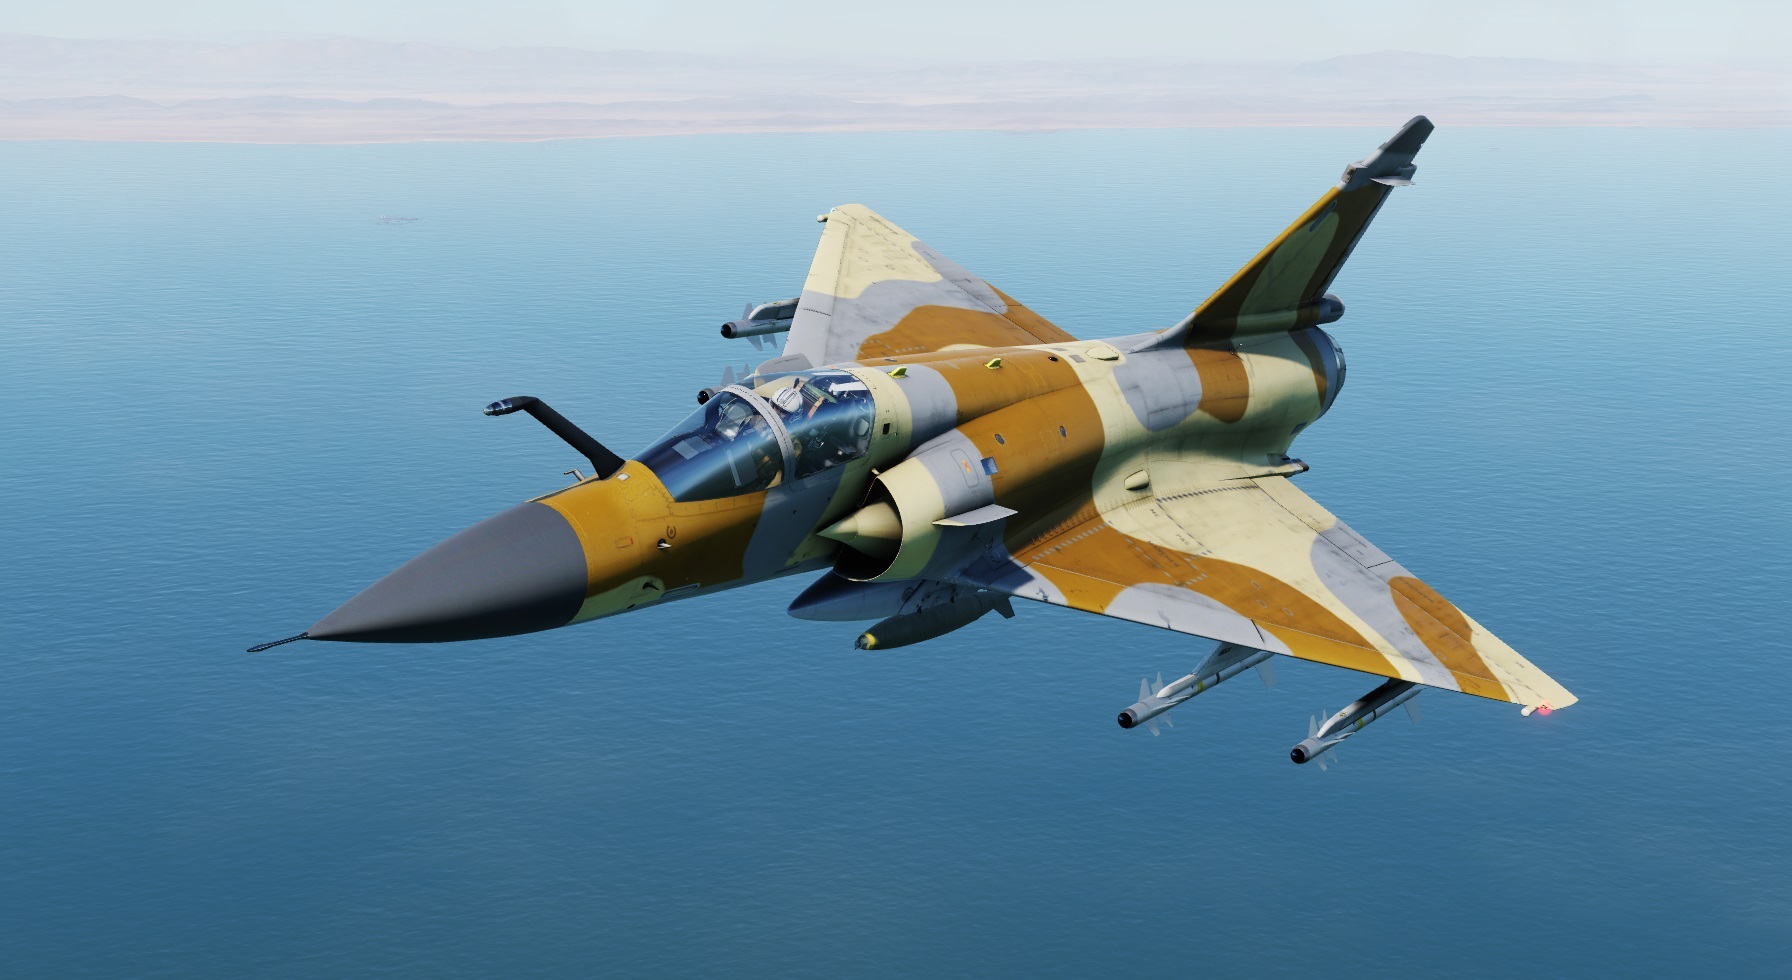 Mercenary Mirage 2k "Strike Commander" [fictional]